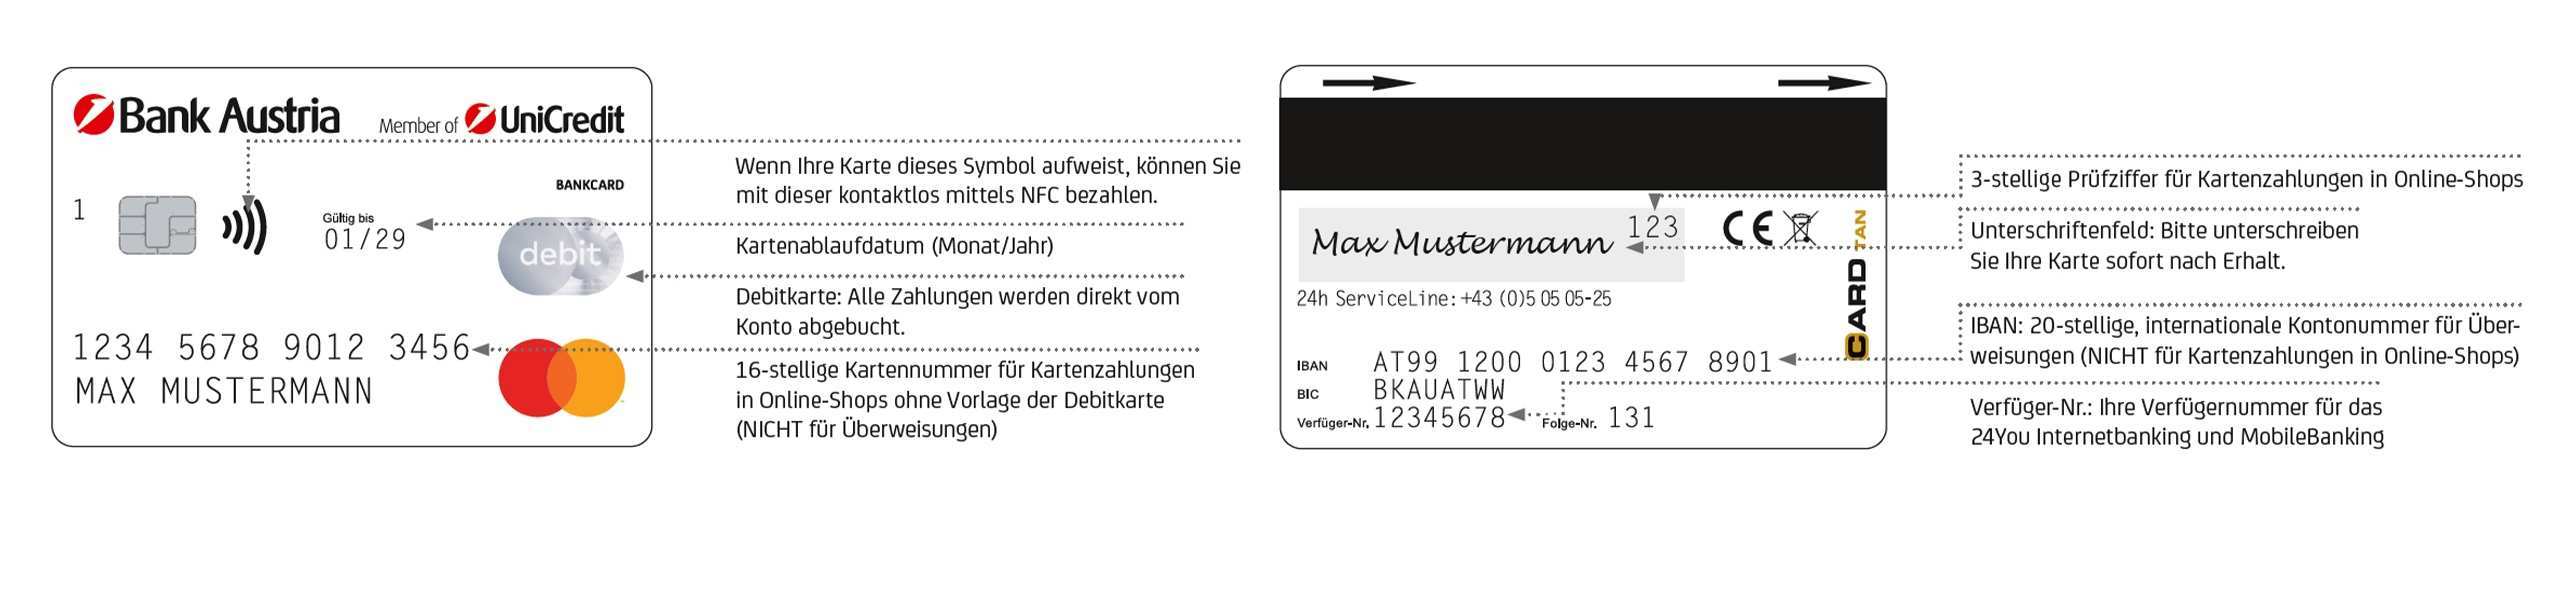 Debitkarte Die Bankcard Der Bank Austria Bank Austria